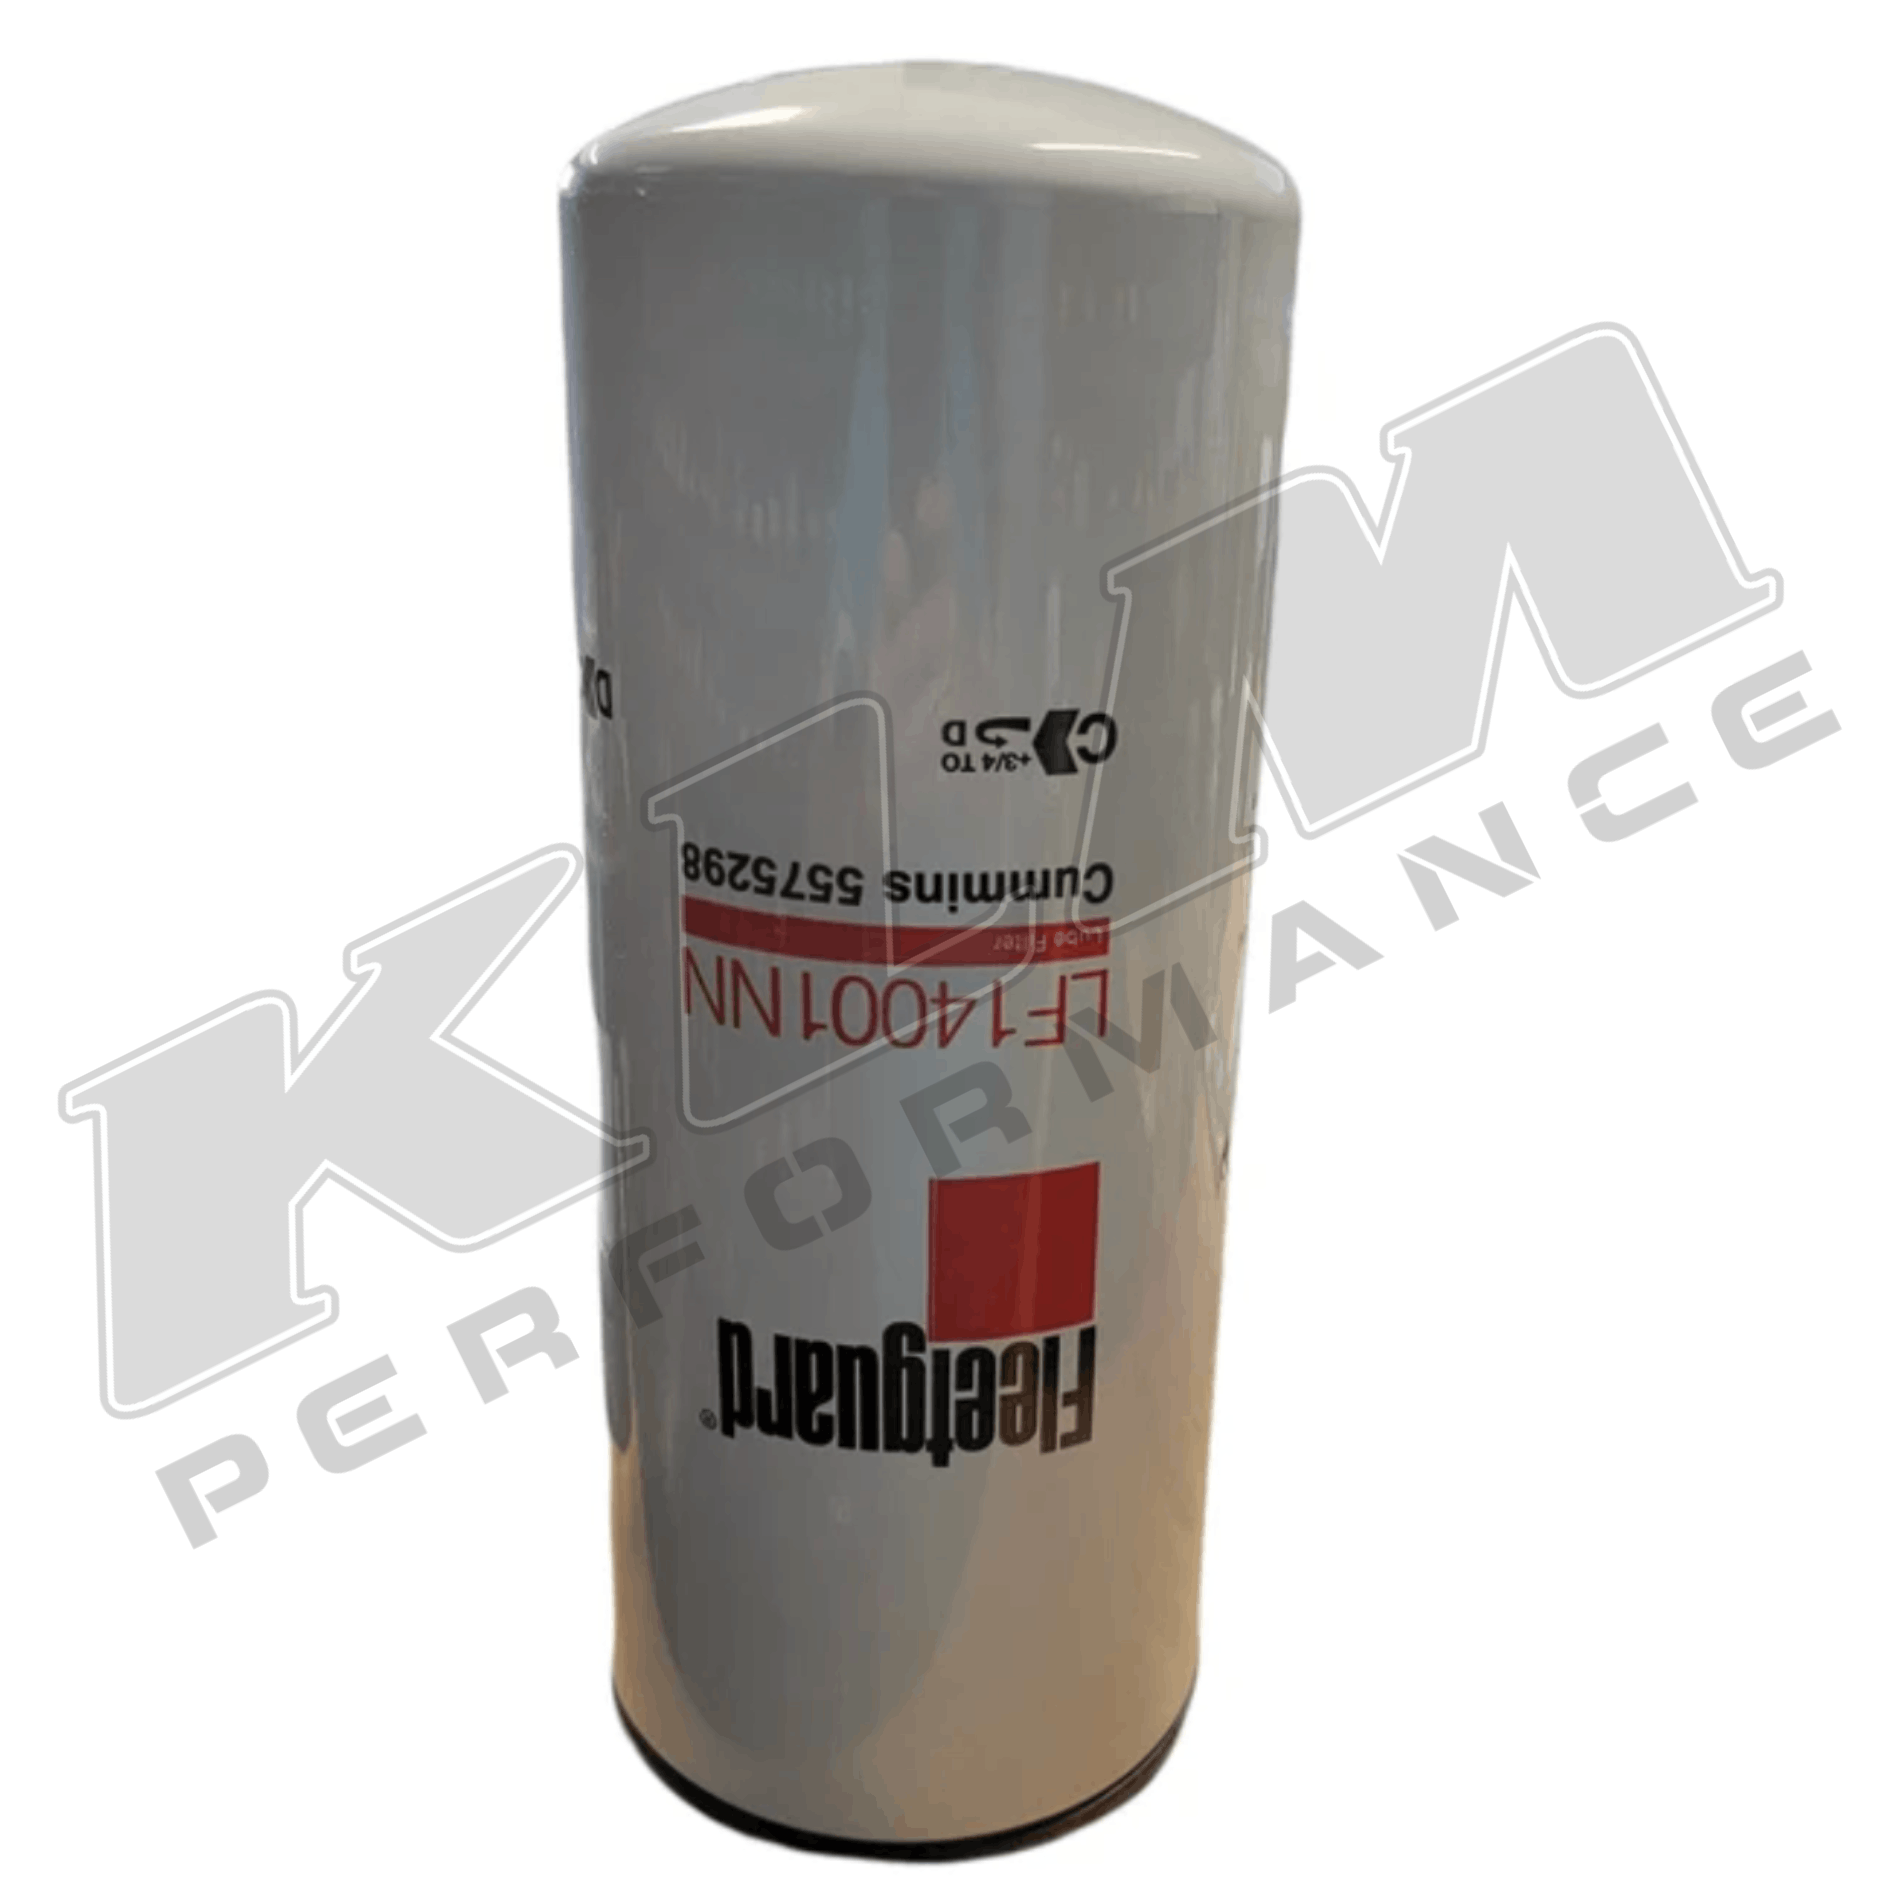 Kit de filtre gasoil FLEETGUARD Bio Diesel MK13381